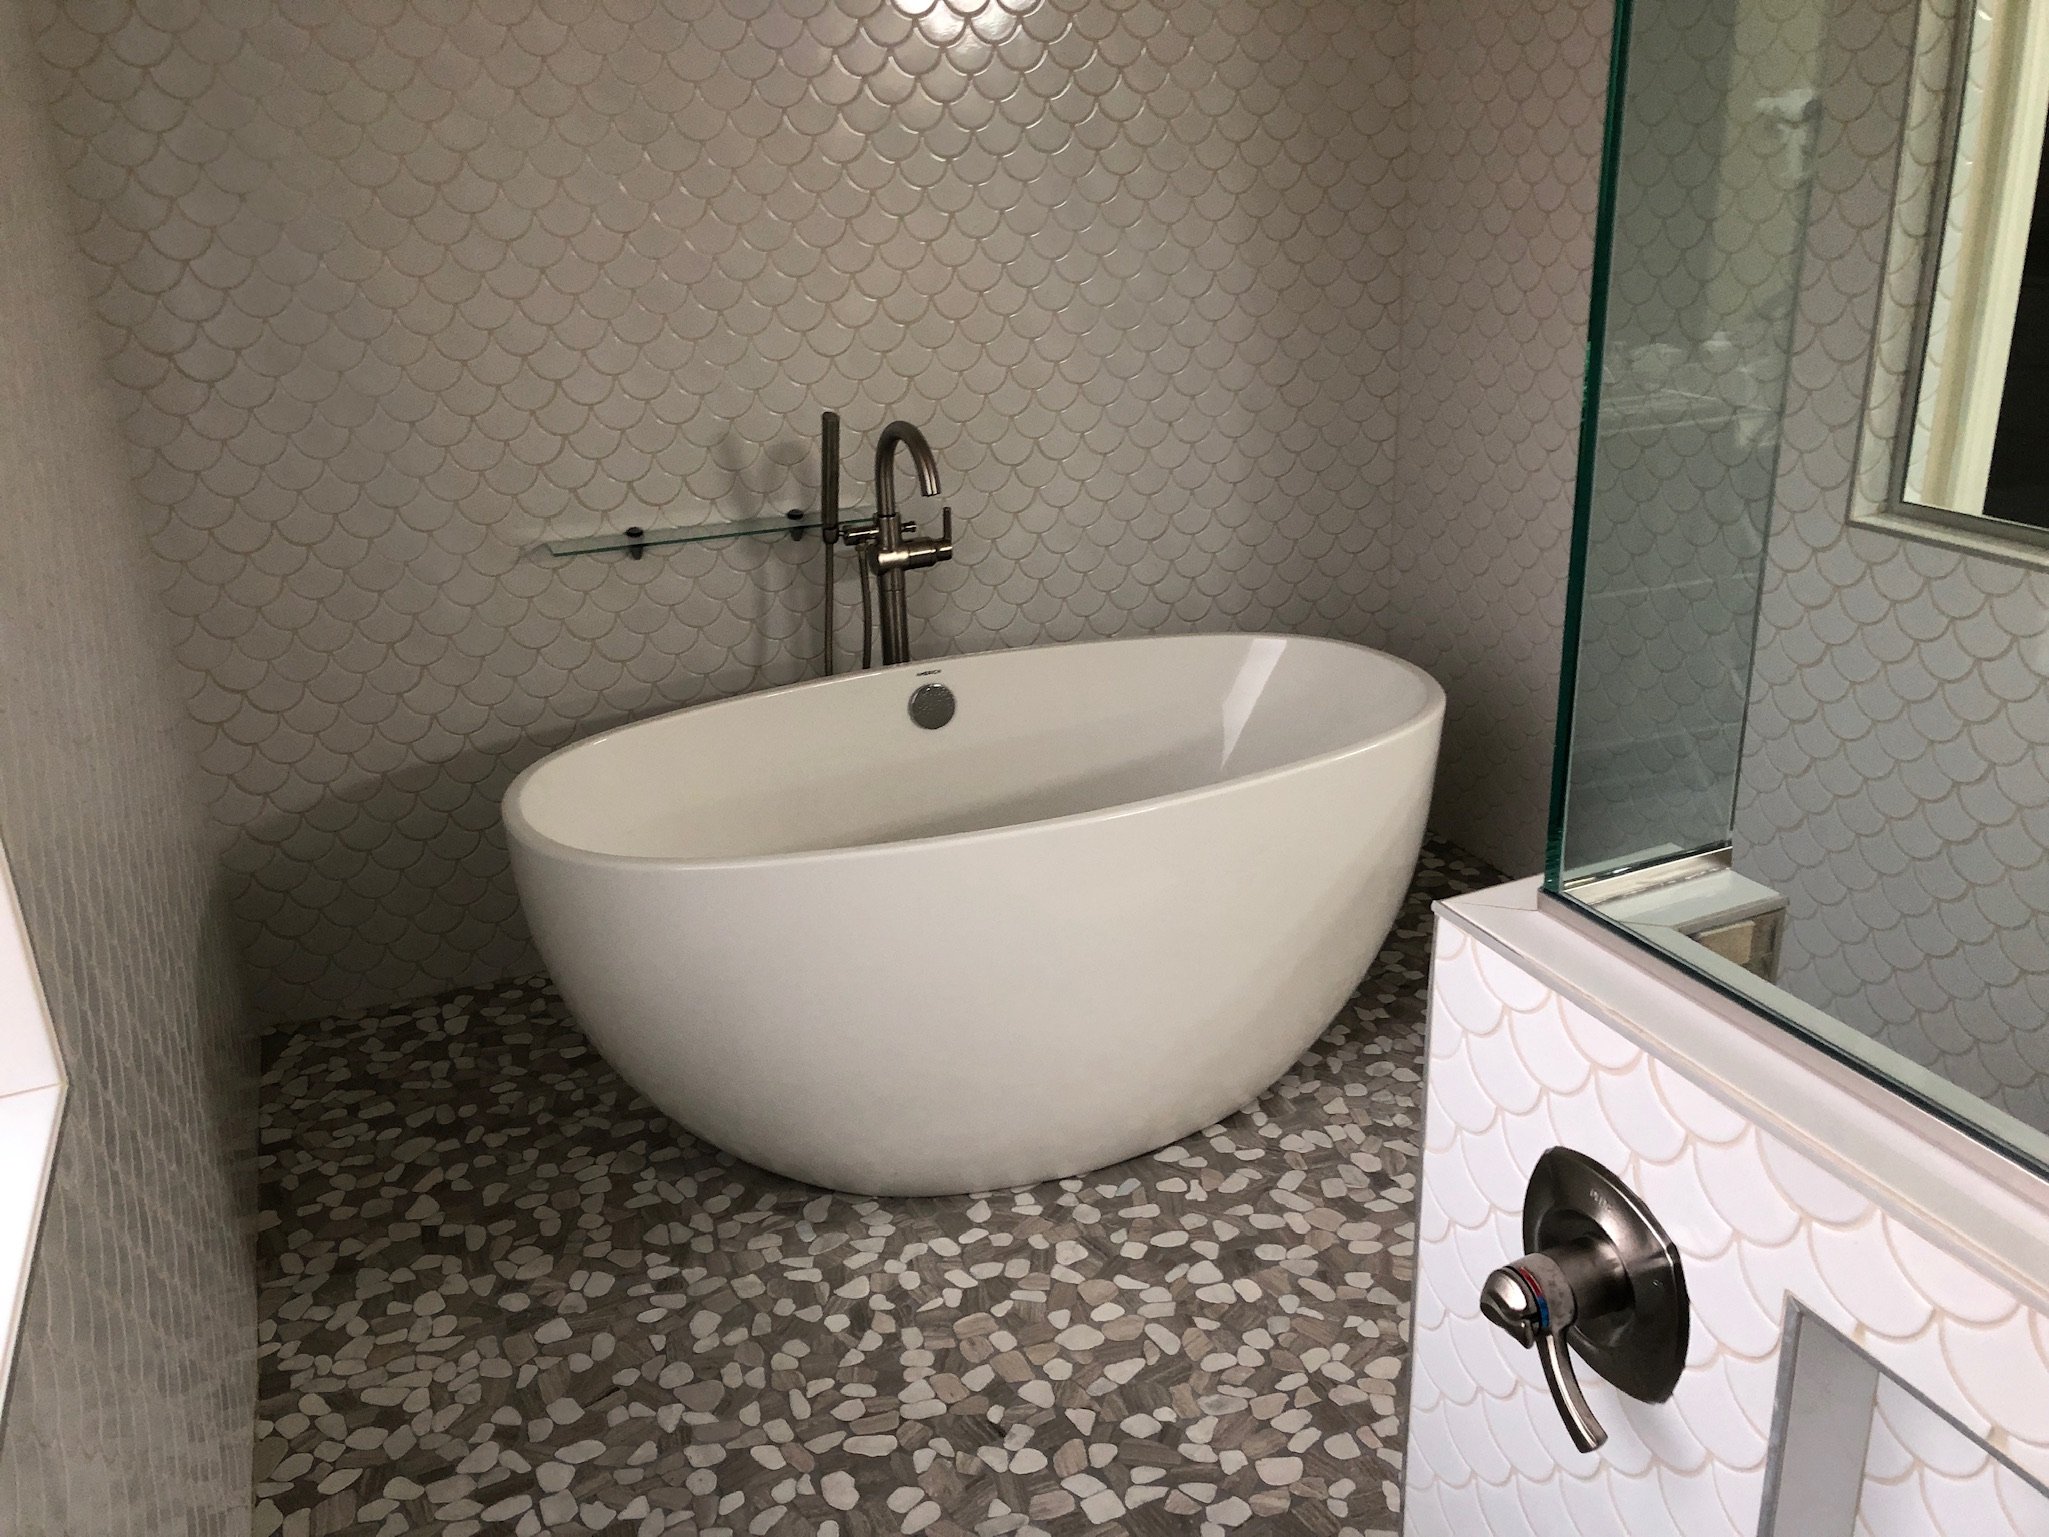 AZ New Bath - Remodel Kitchen and Bath - Arizona0155.JPG